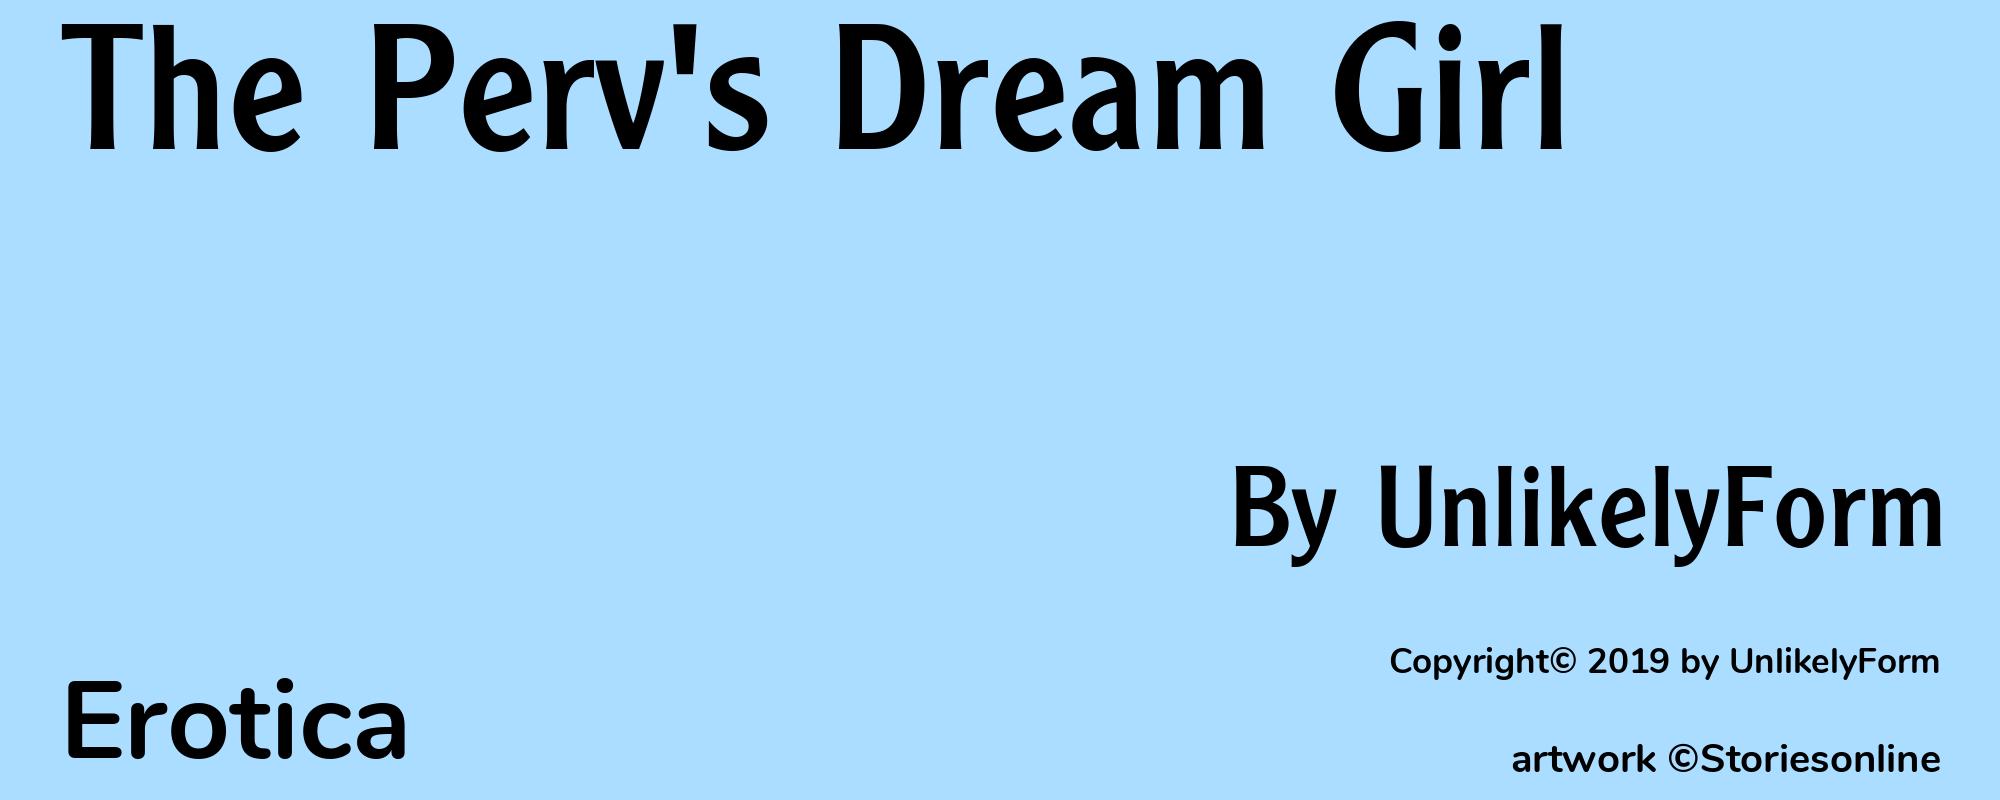 The Perv's Dream Girl - Cover